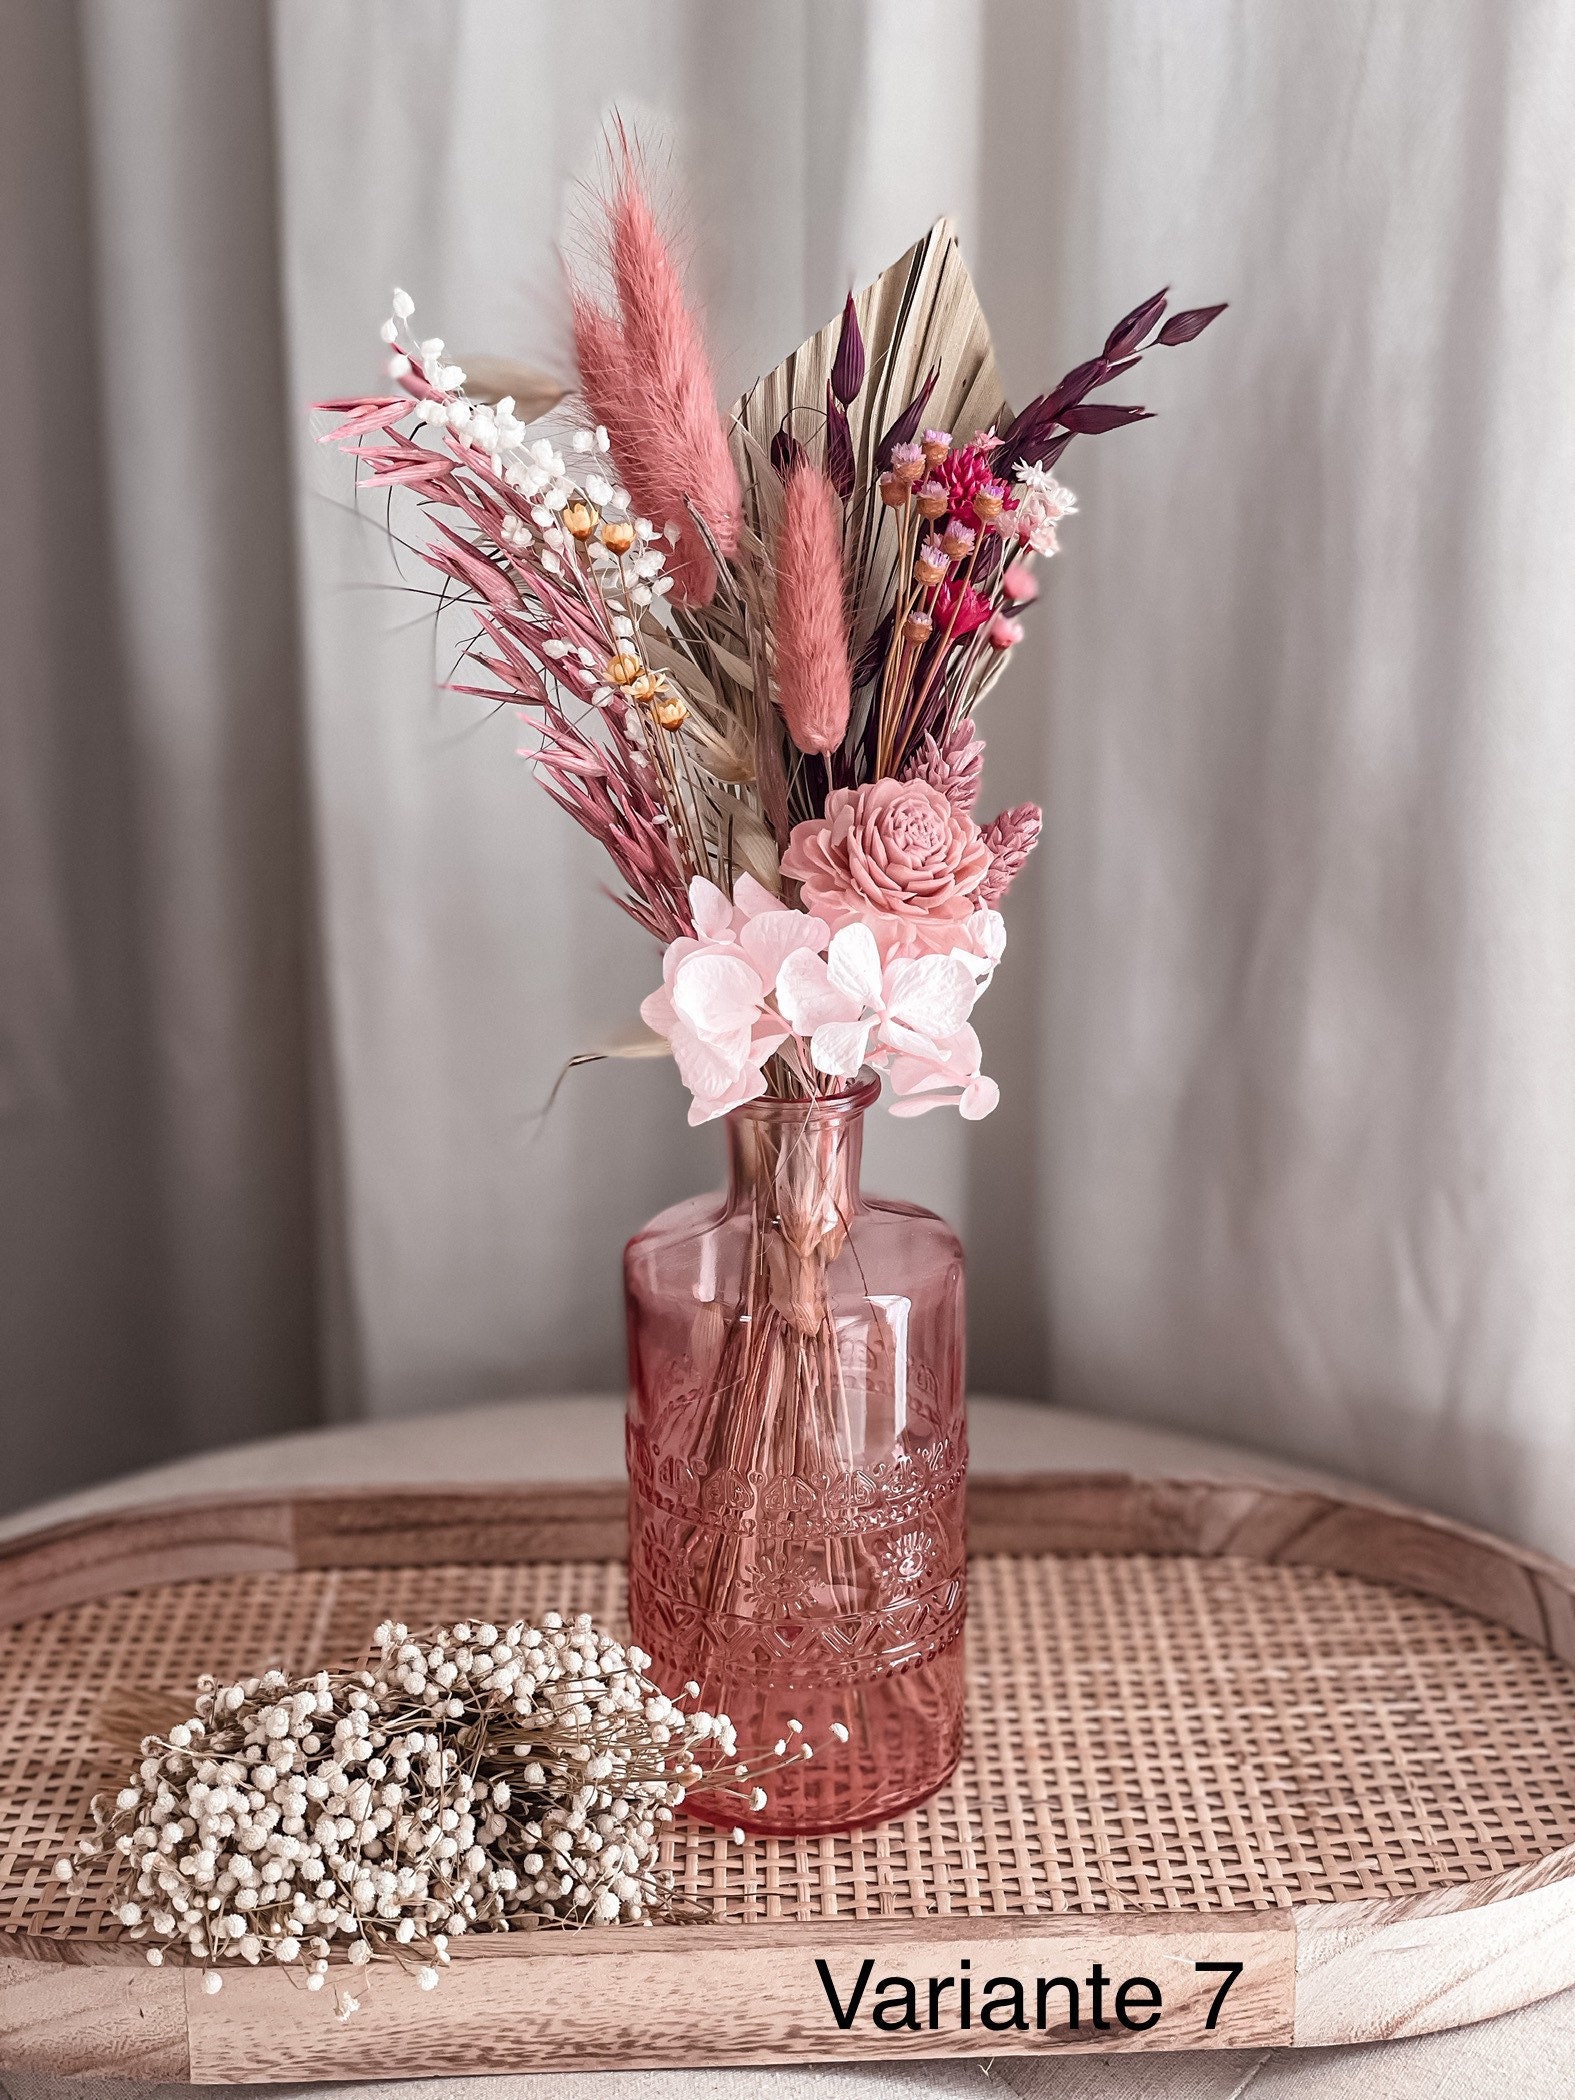 Dry Flower Bouquets, White and Cream Tones, Pampas, Lagurus